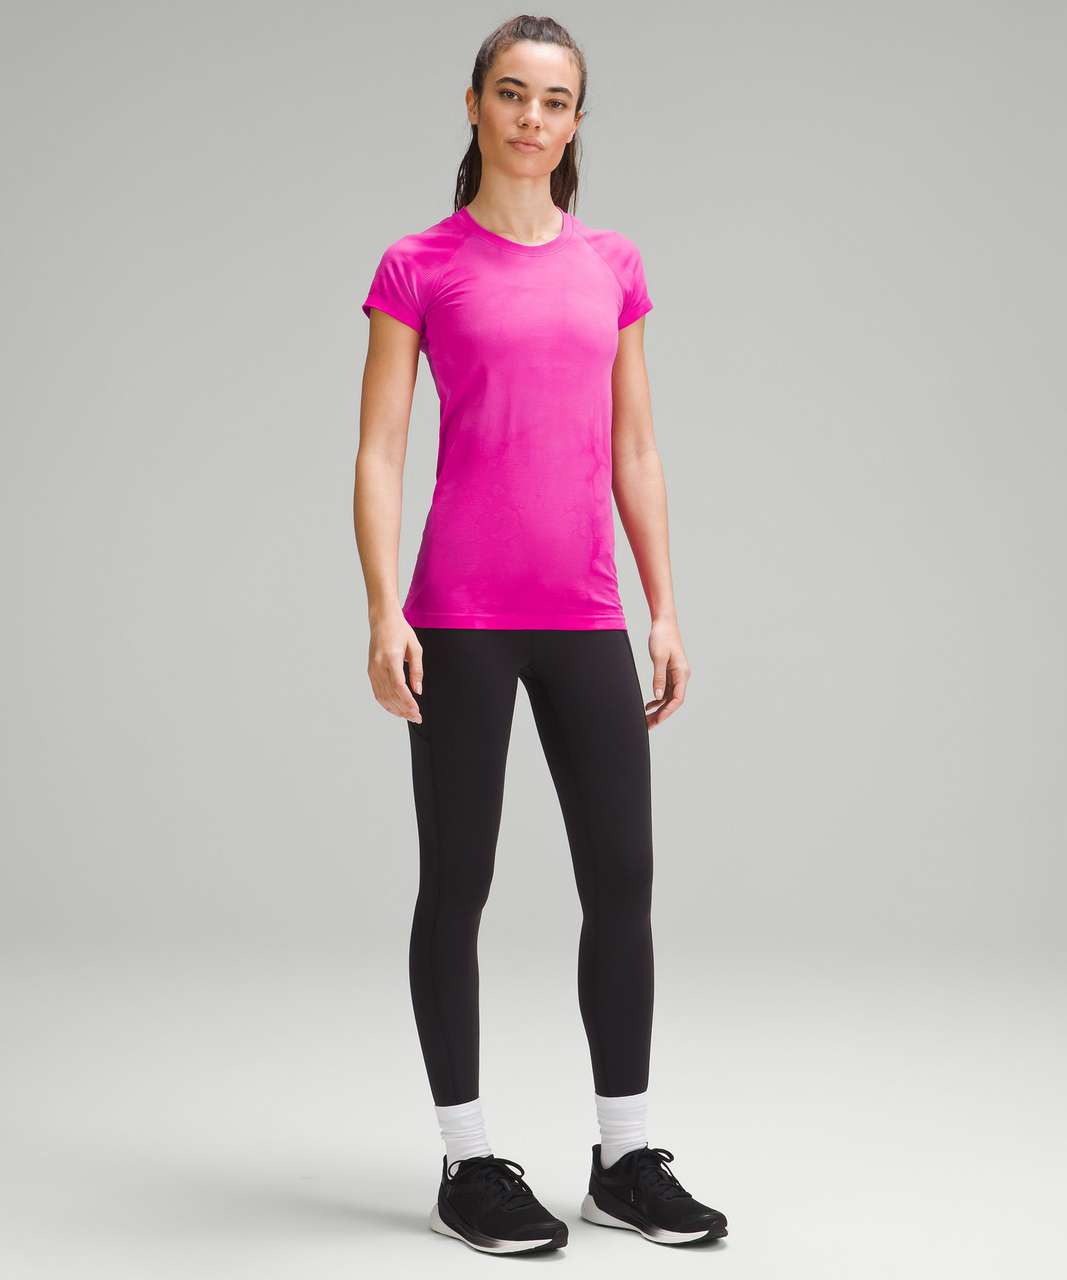 Lululemon Swiftly Tech Short-Sleeve Shirt 2.0 - Marble Dye Sonic Pink